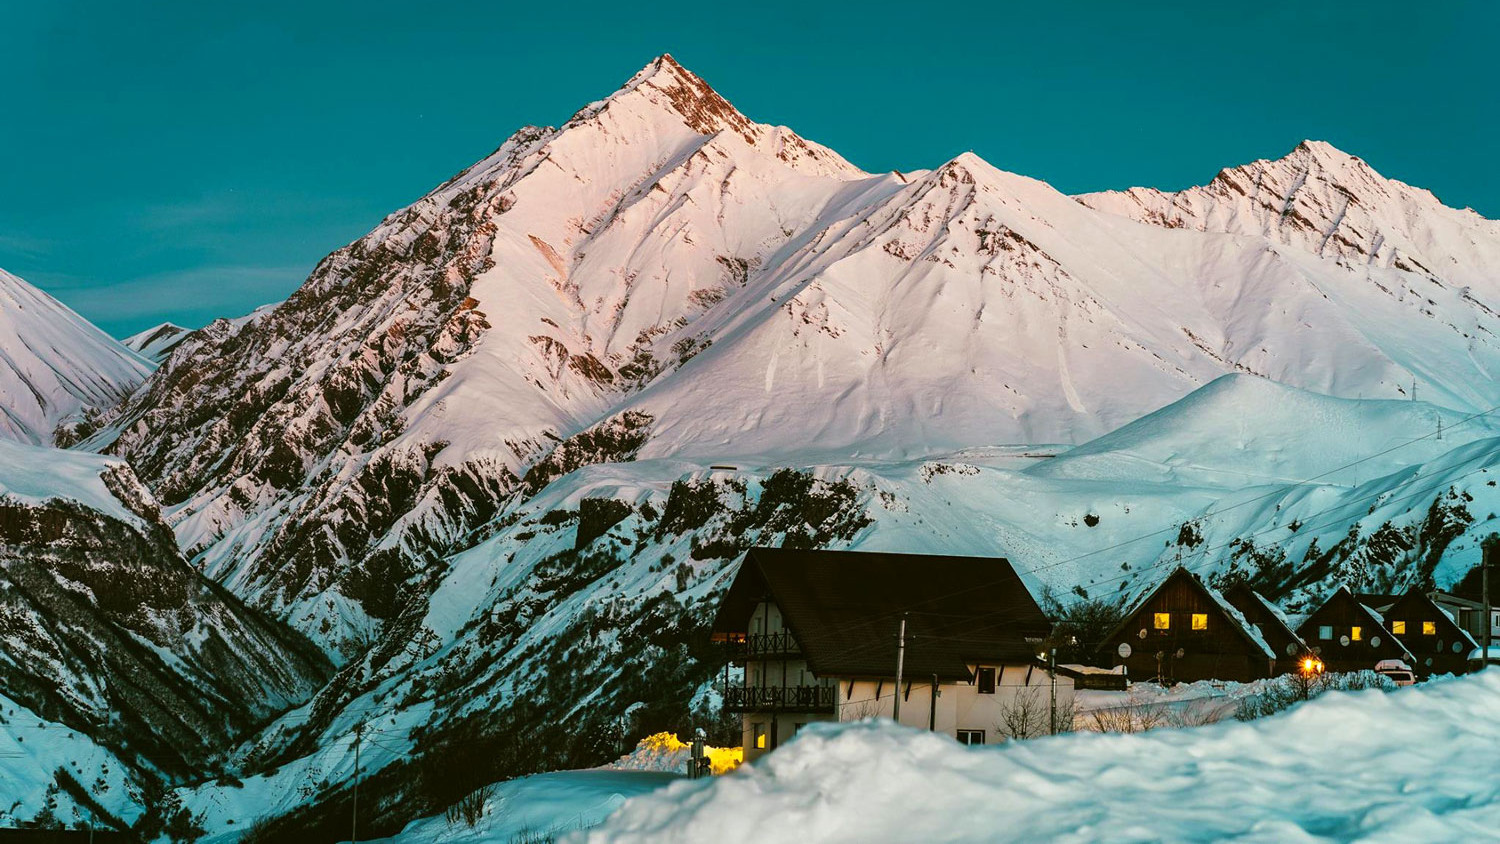 Gudauri Ski resort, Georgia